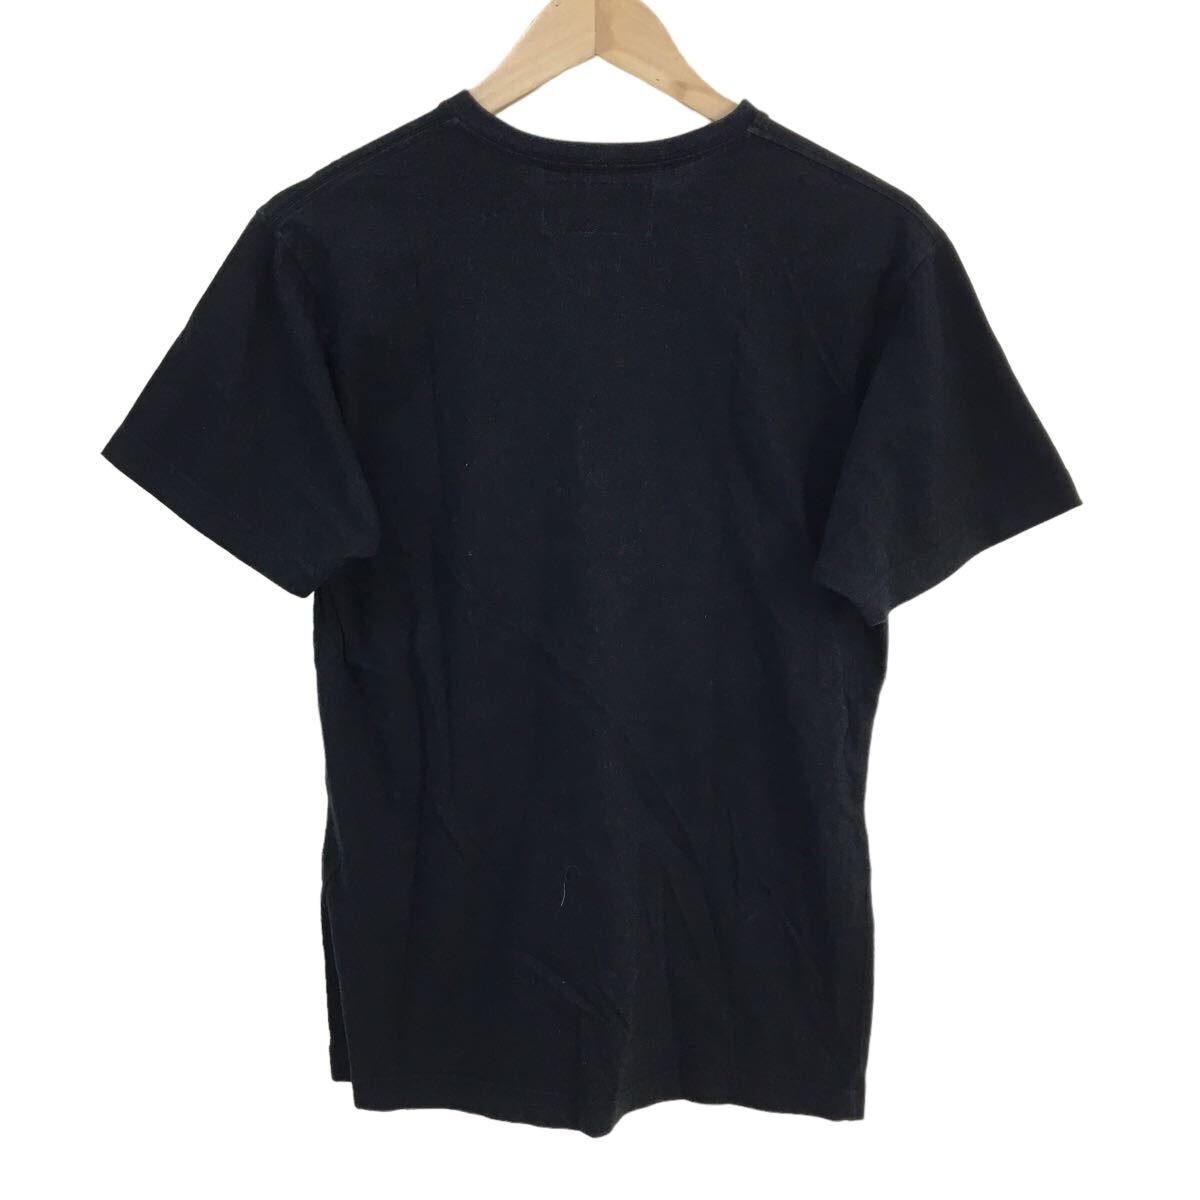 D533-14 日本製 NEIGHBORHOOD ネイバーフッド 半袖 Tシャツ トップス プルオーバー クルーネック コットン 綿 100% ブラック メンズ M_画像5